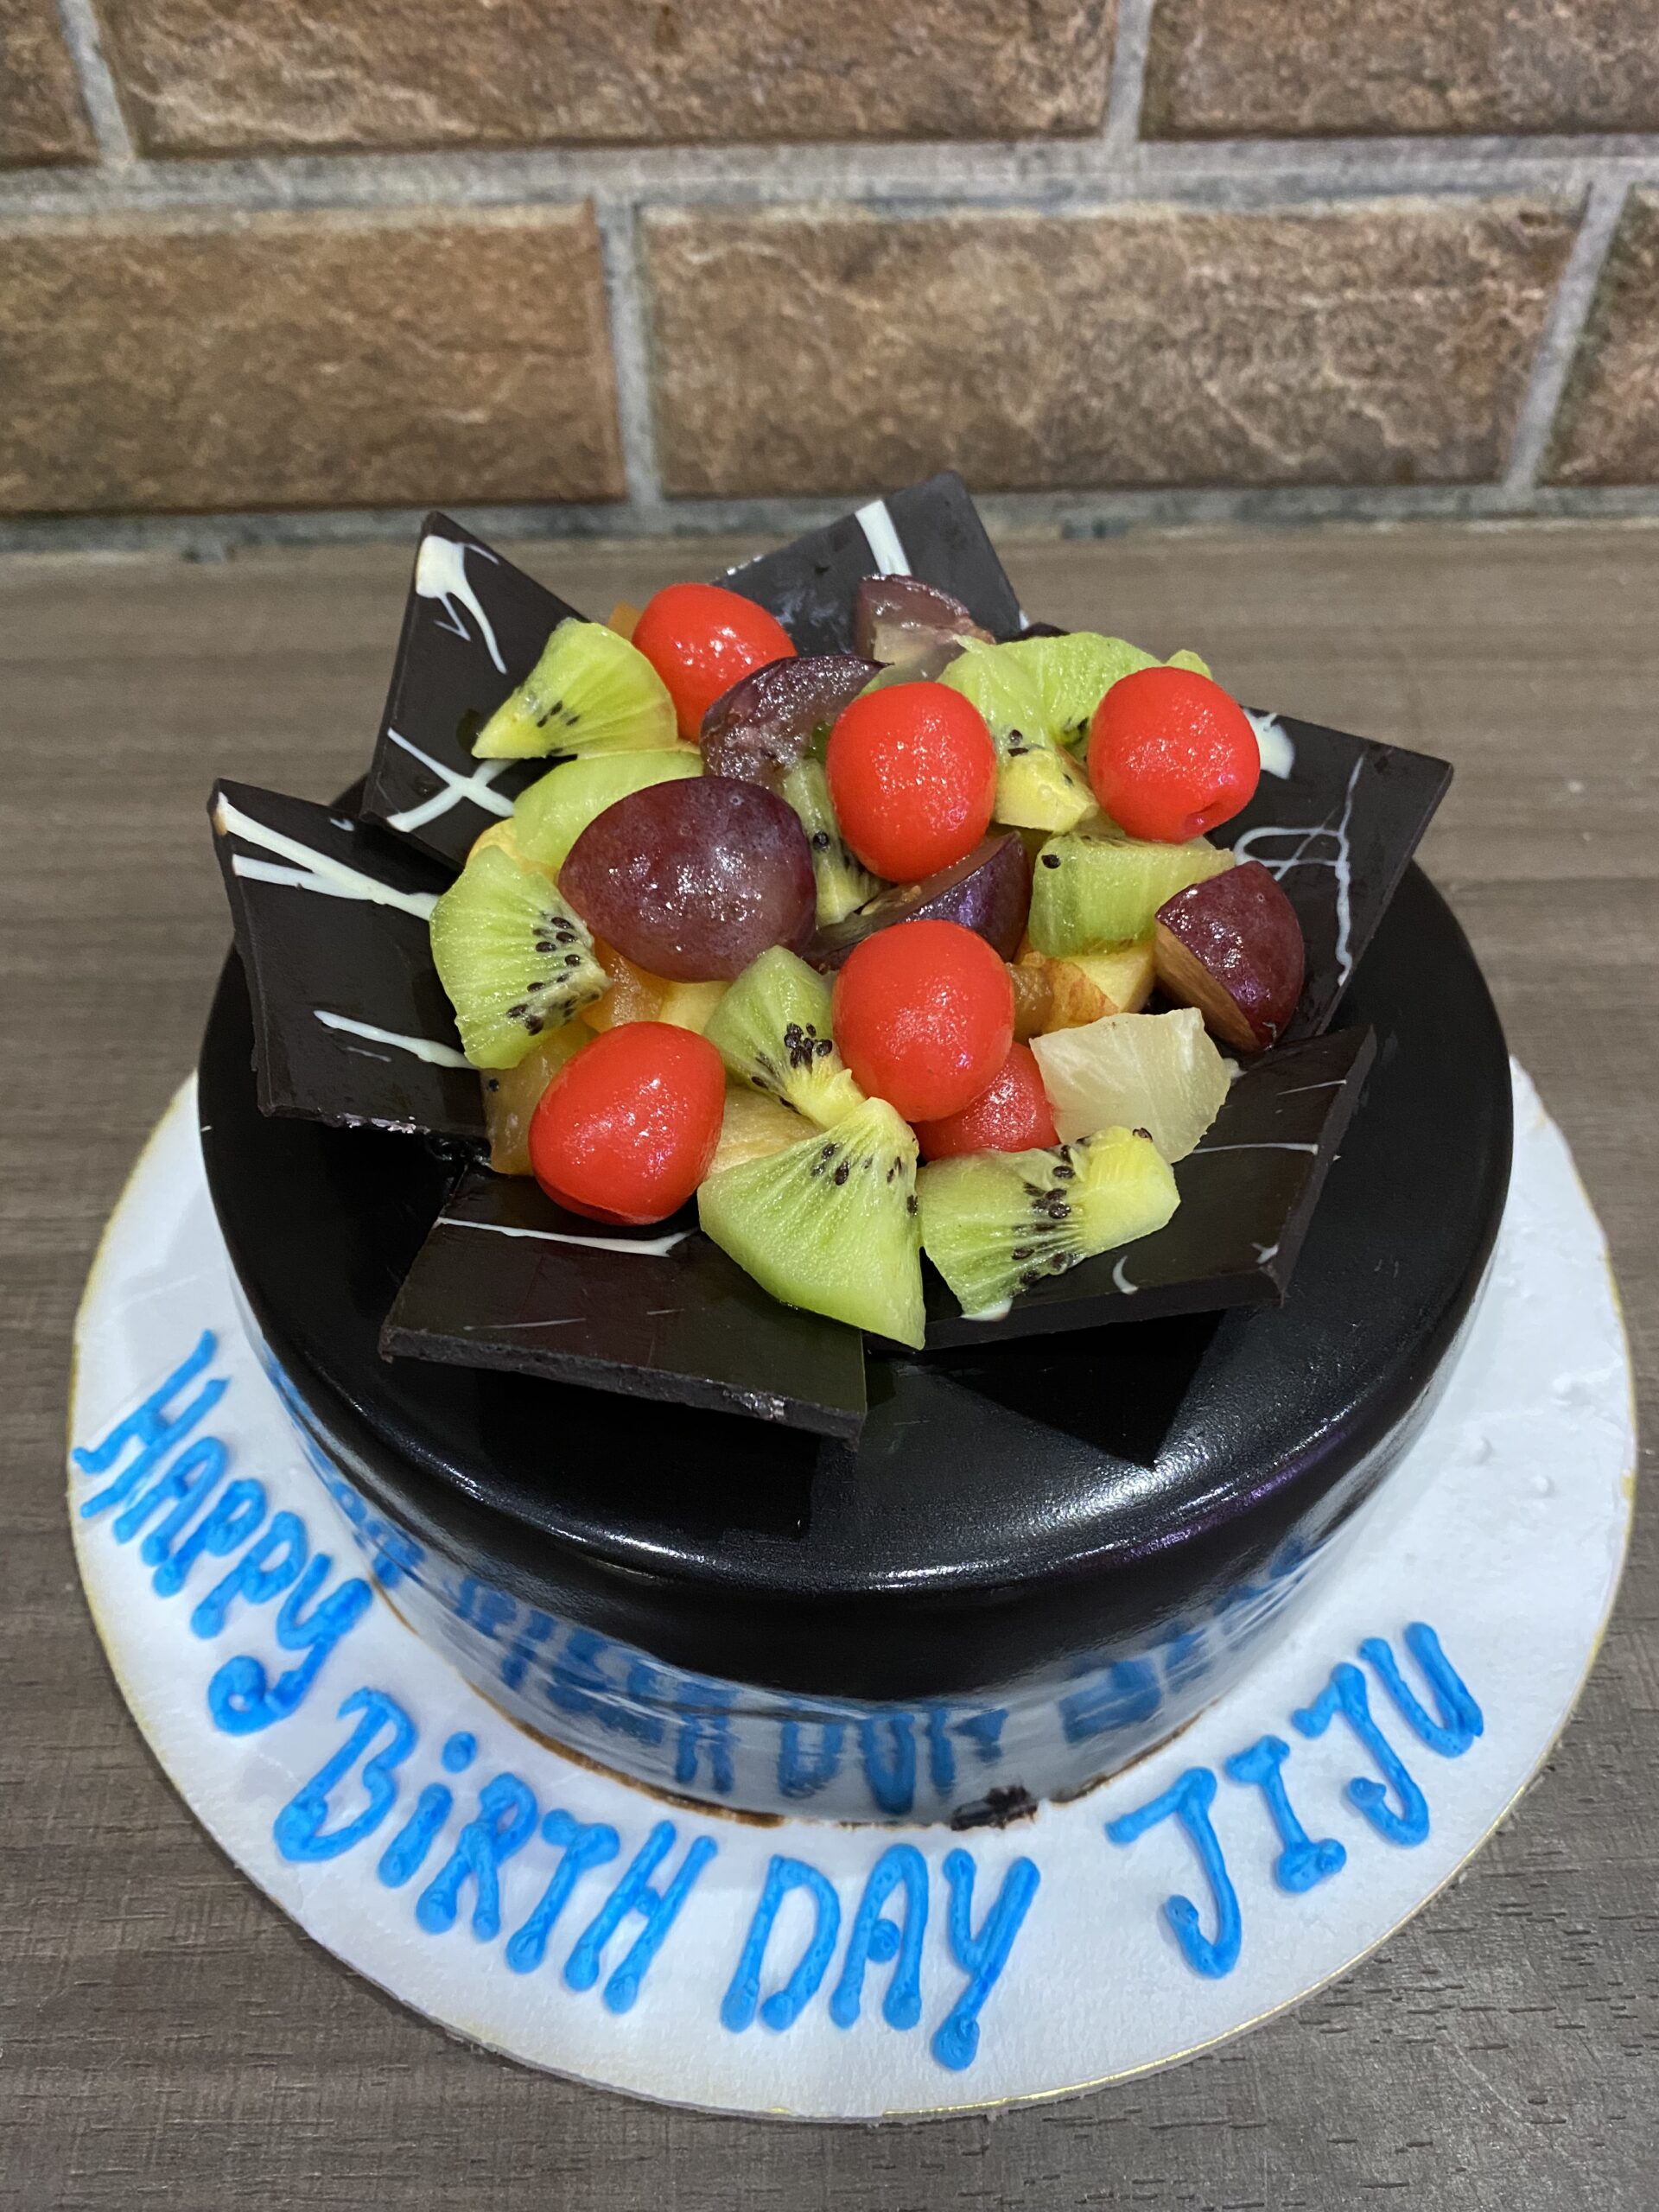 Jiju Happy Birthday Cakes Pics Gallery